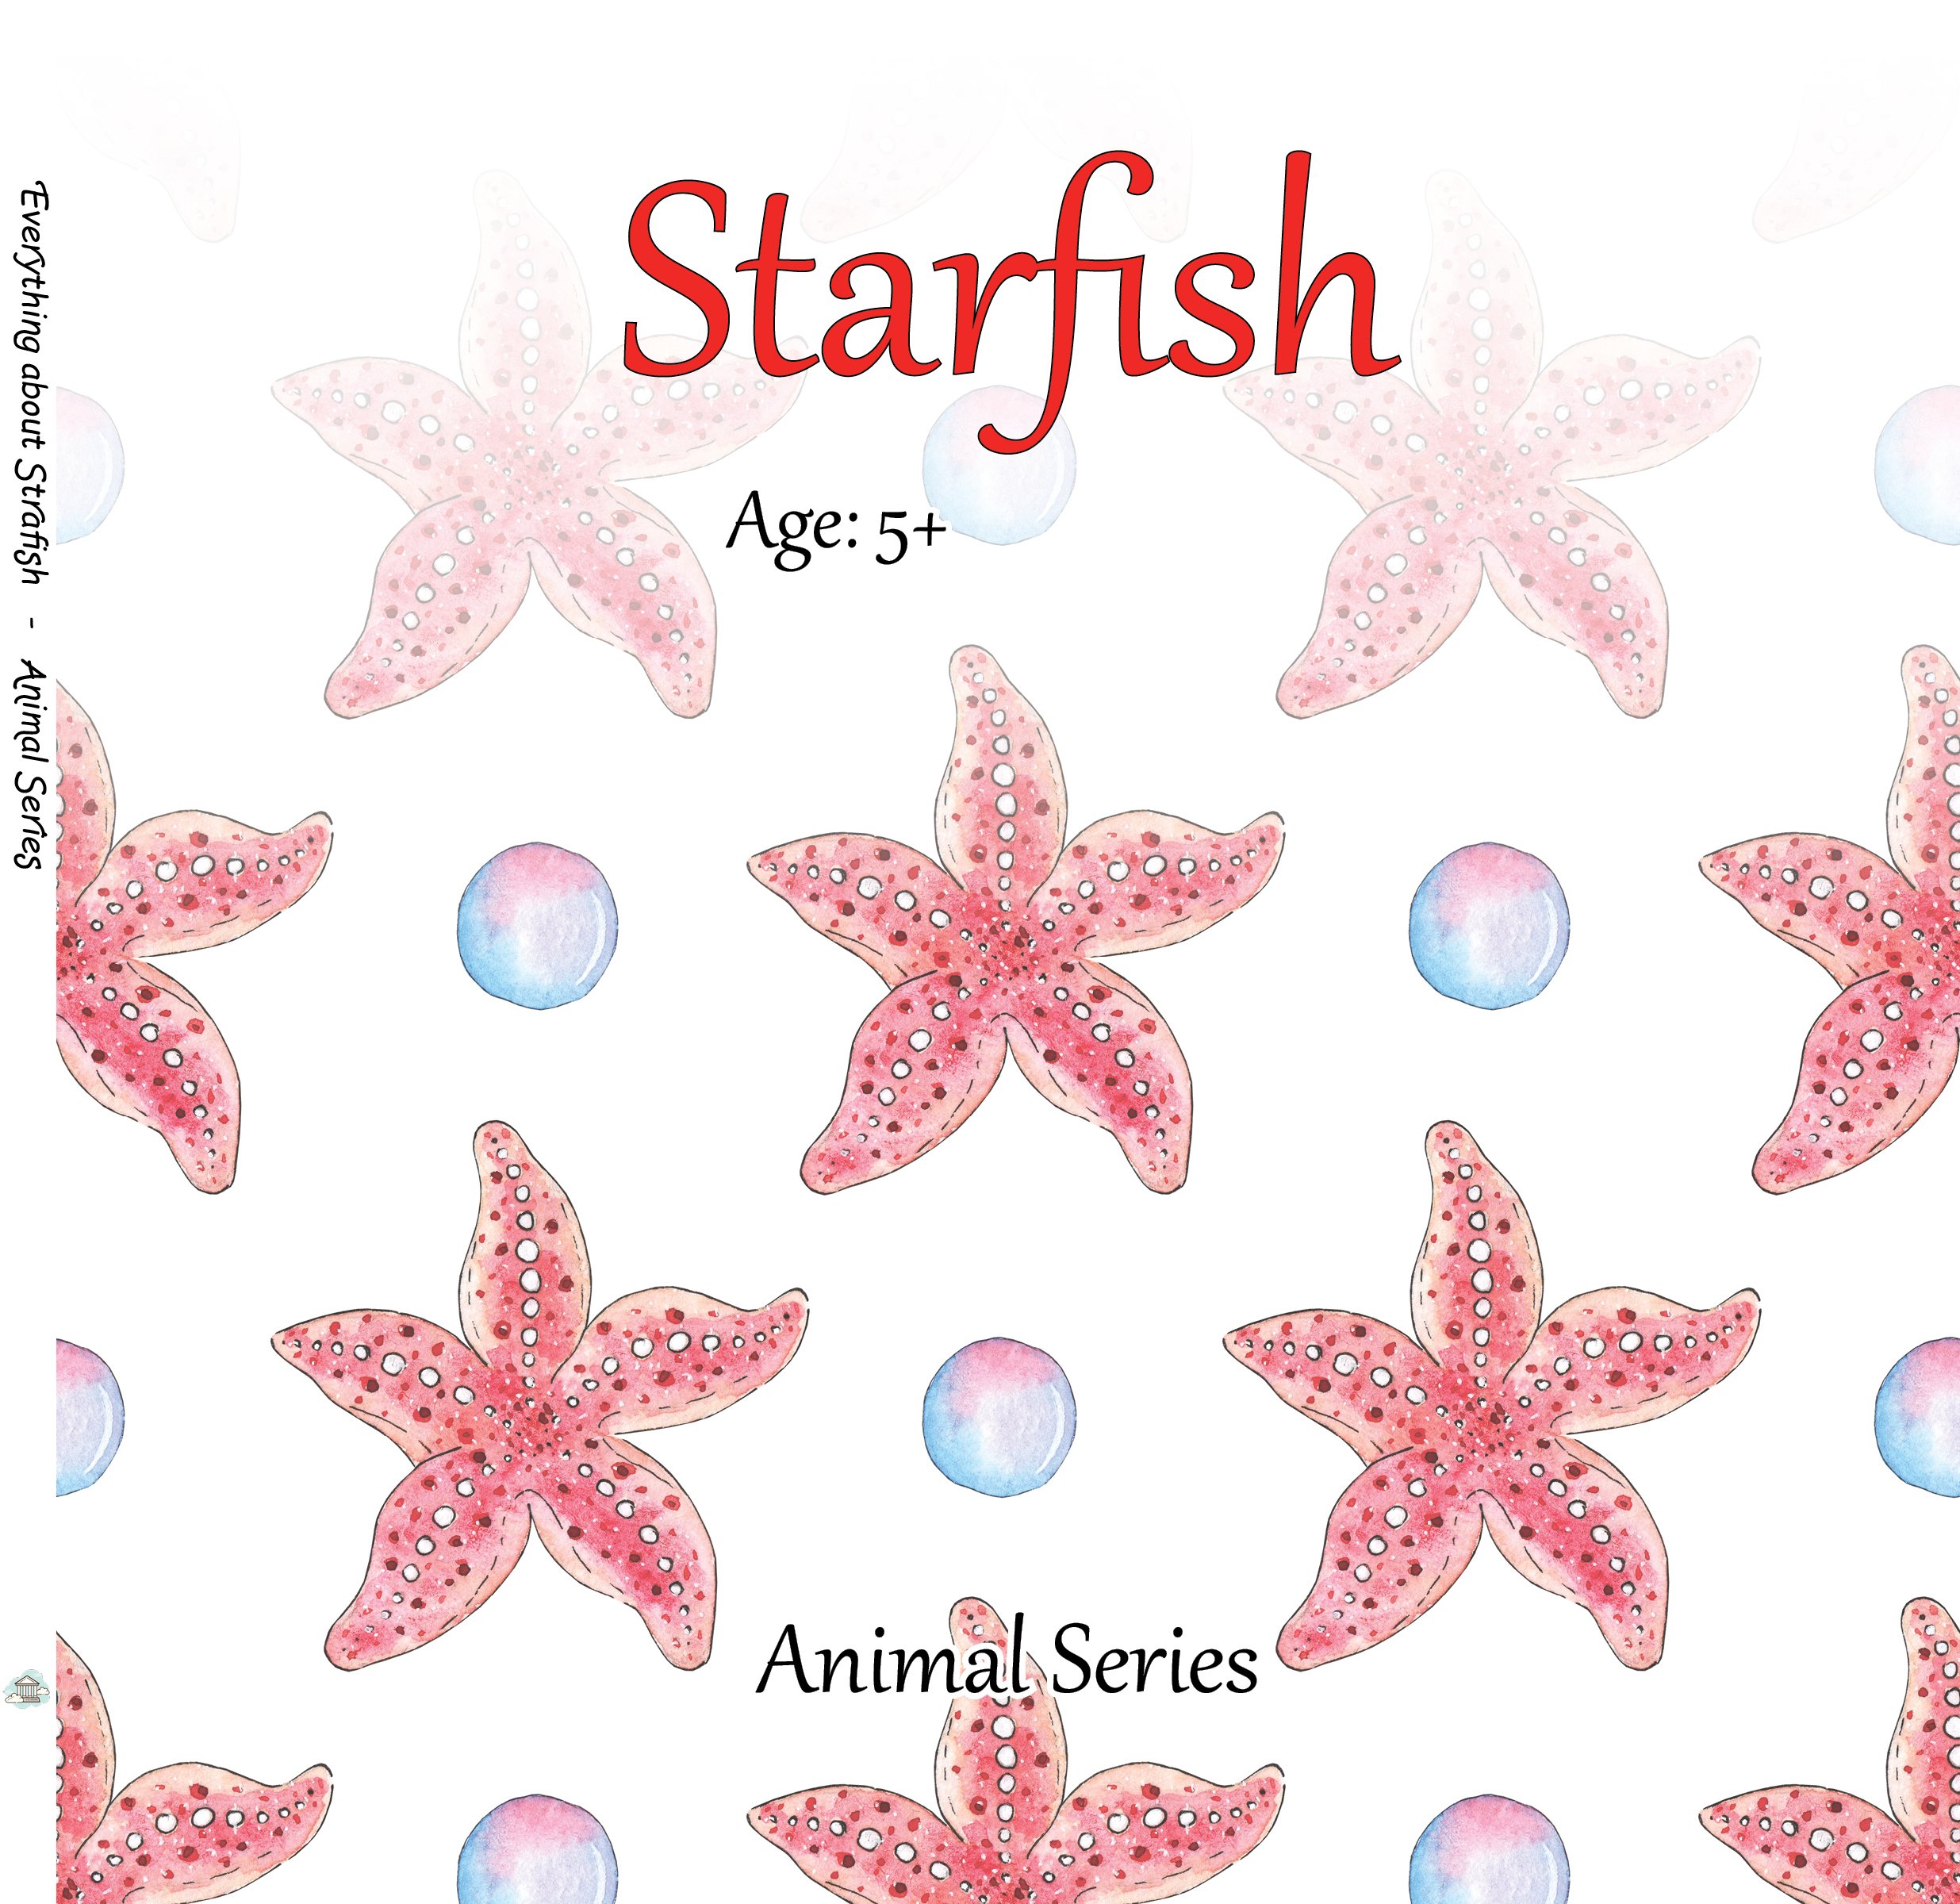 Everything about Starfish - Animal Series.jpg